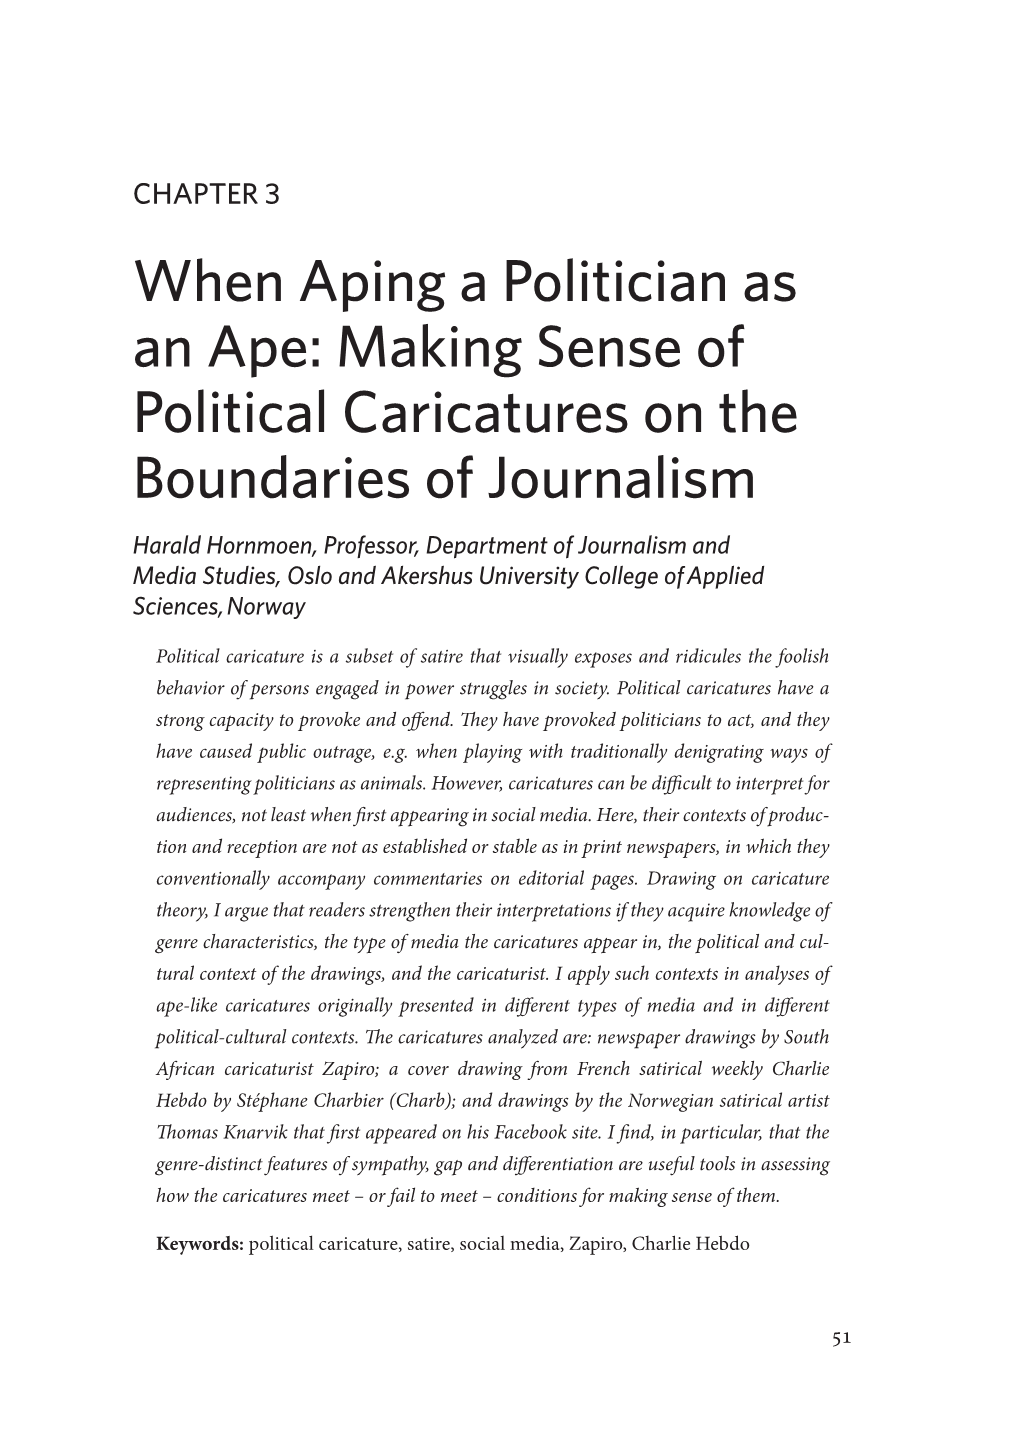 When Aping a Politician As an Ape: Making Sense of Political